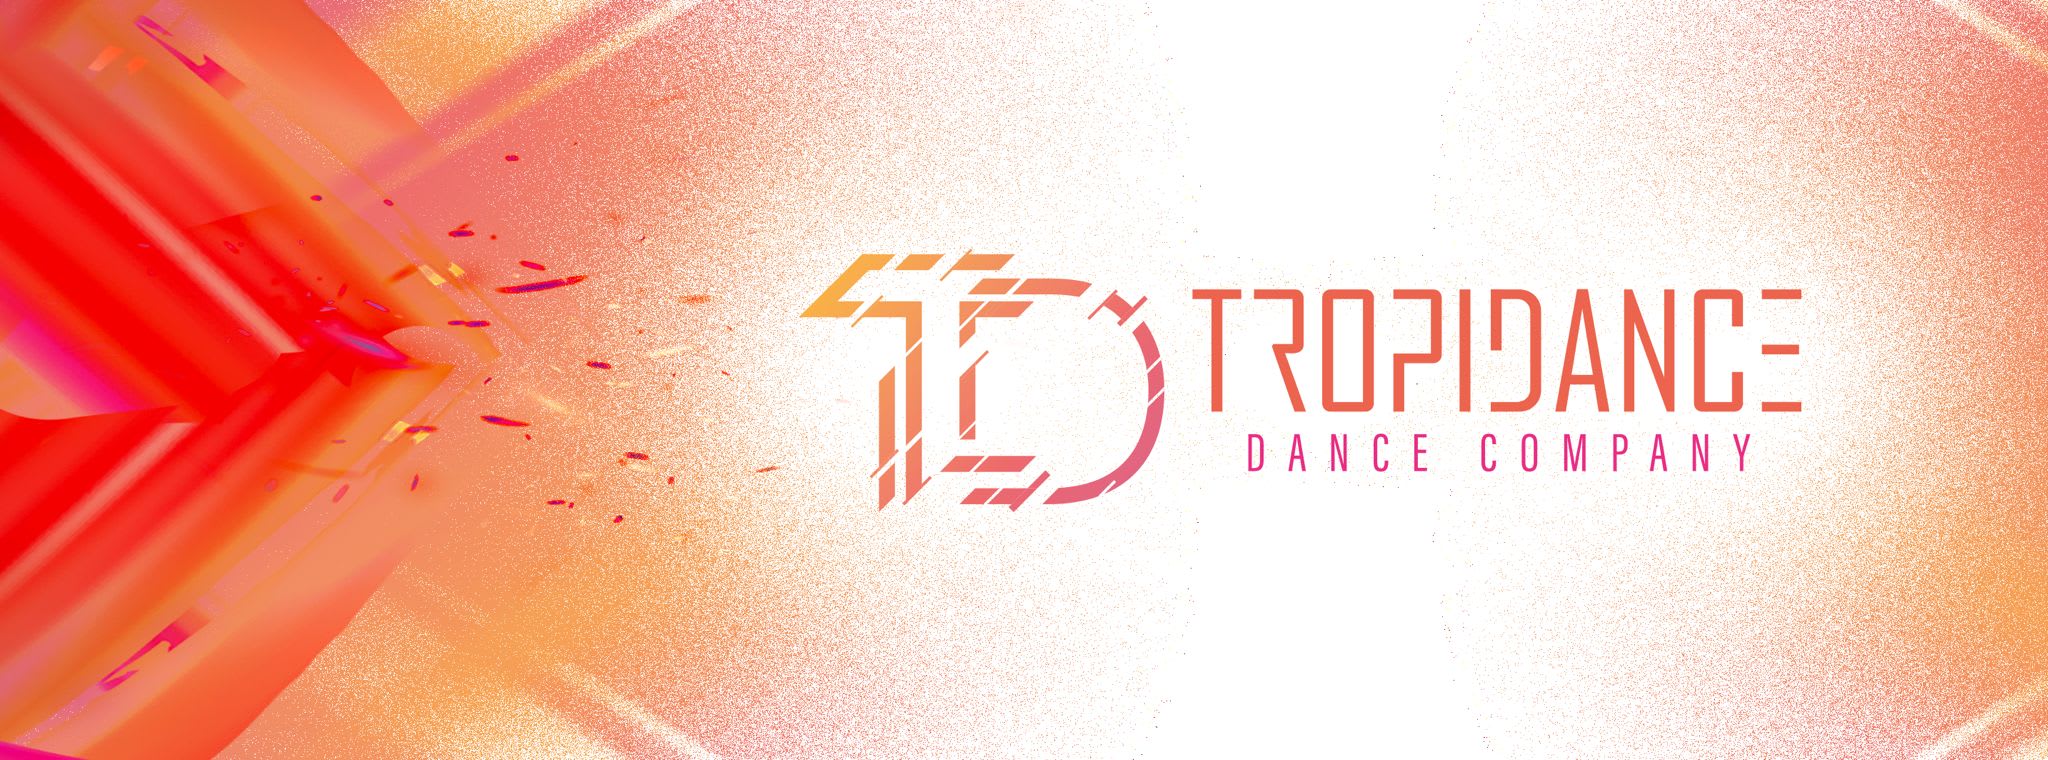 Tropidance dance Company